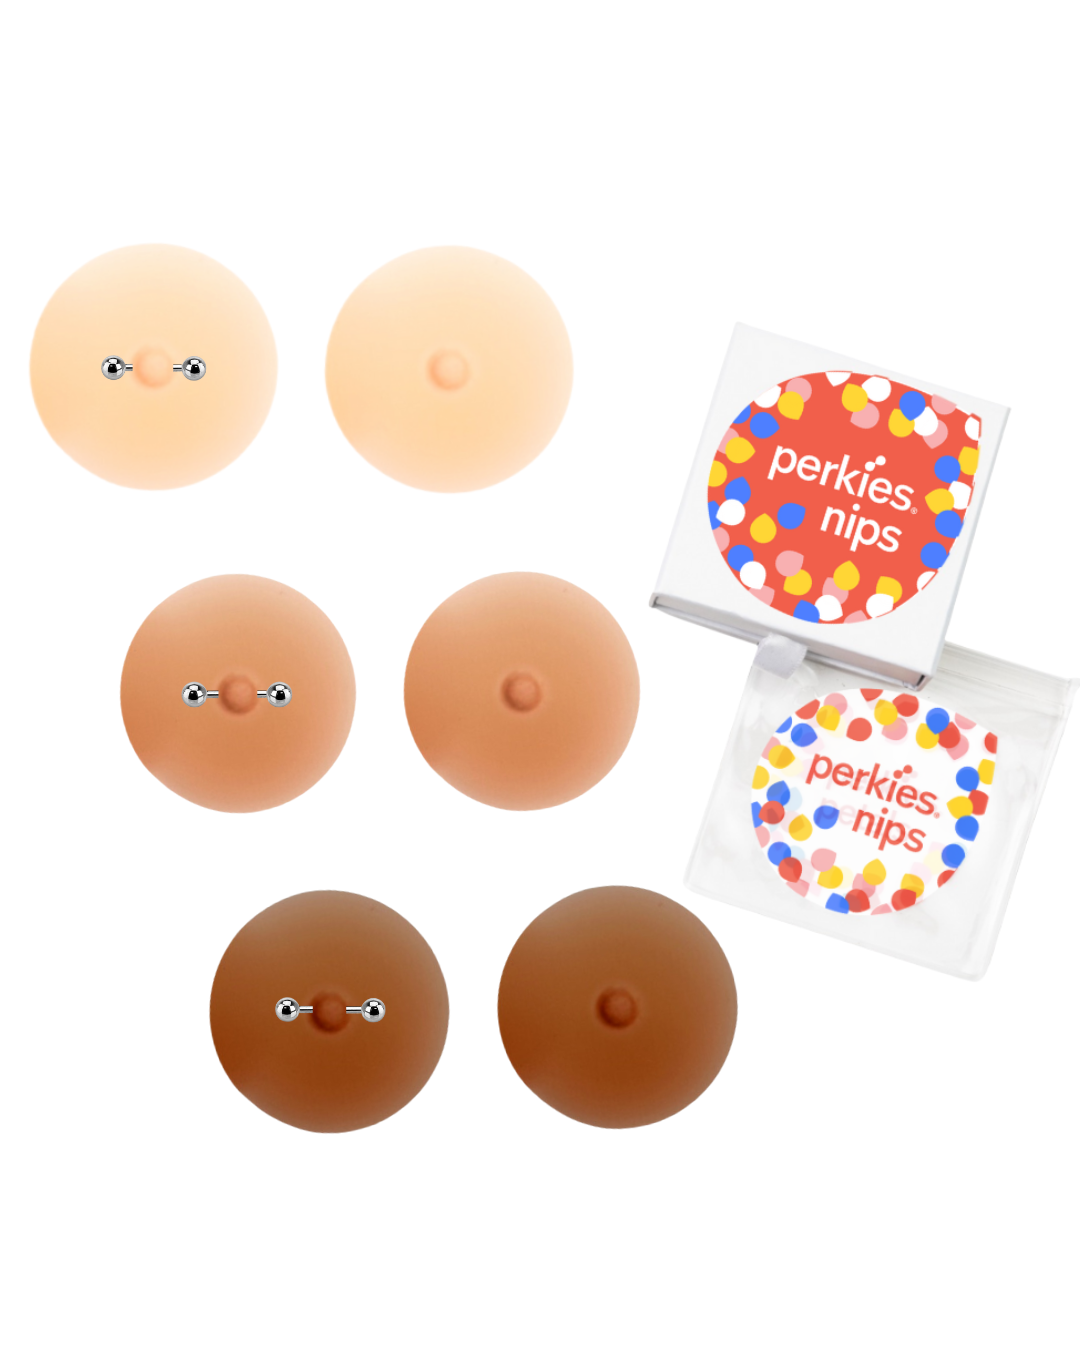 Perkies Nips: Nipple Enhancers by Perkies